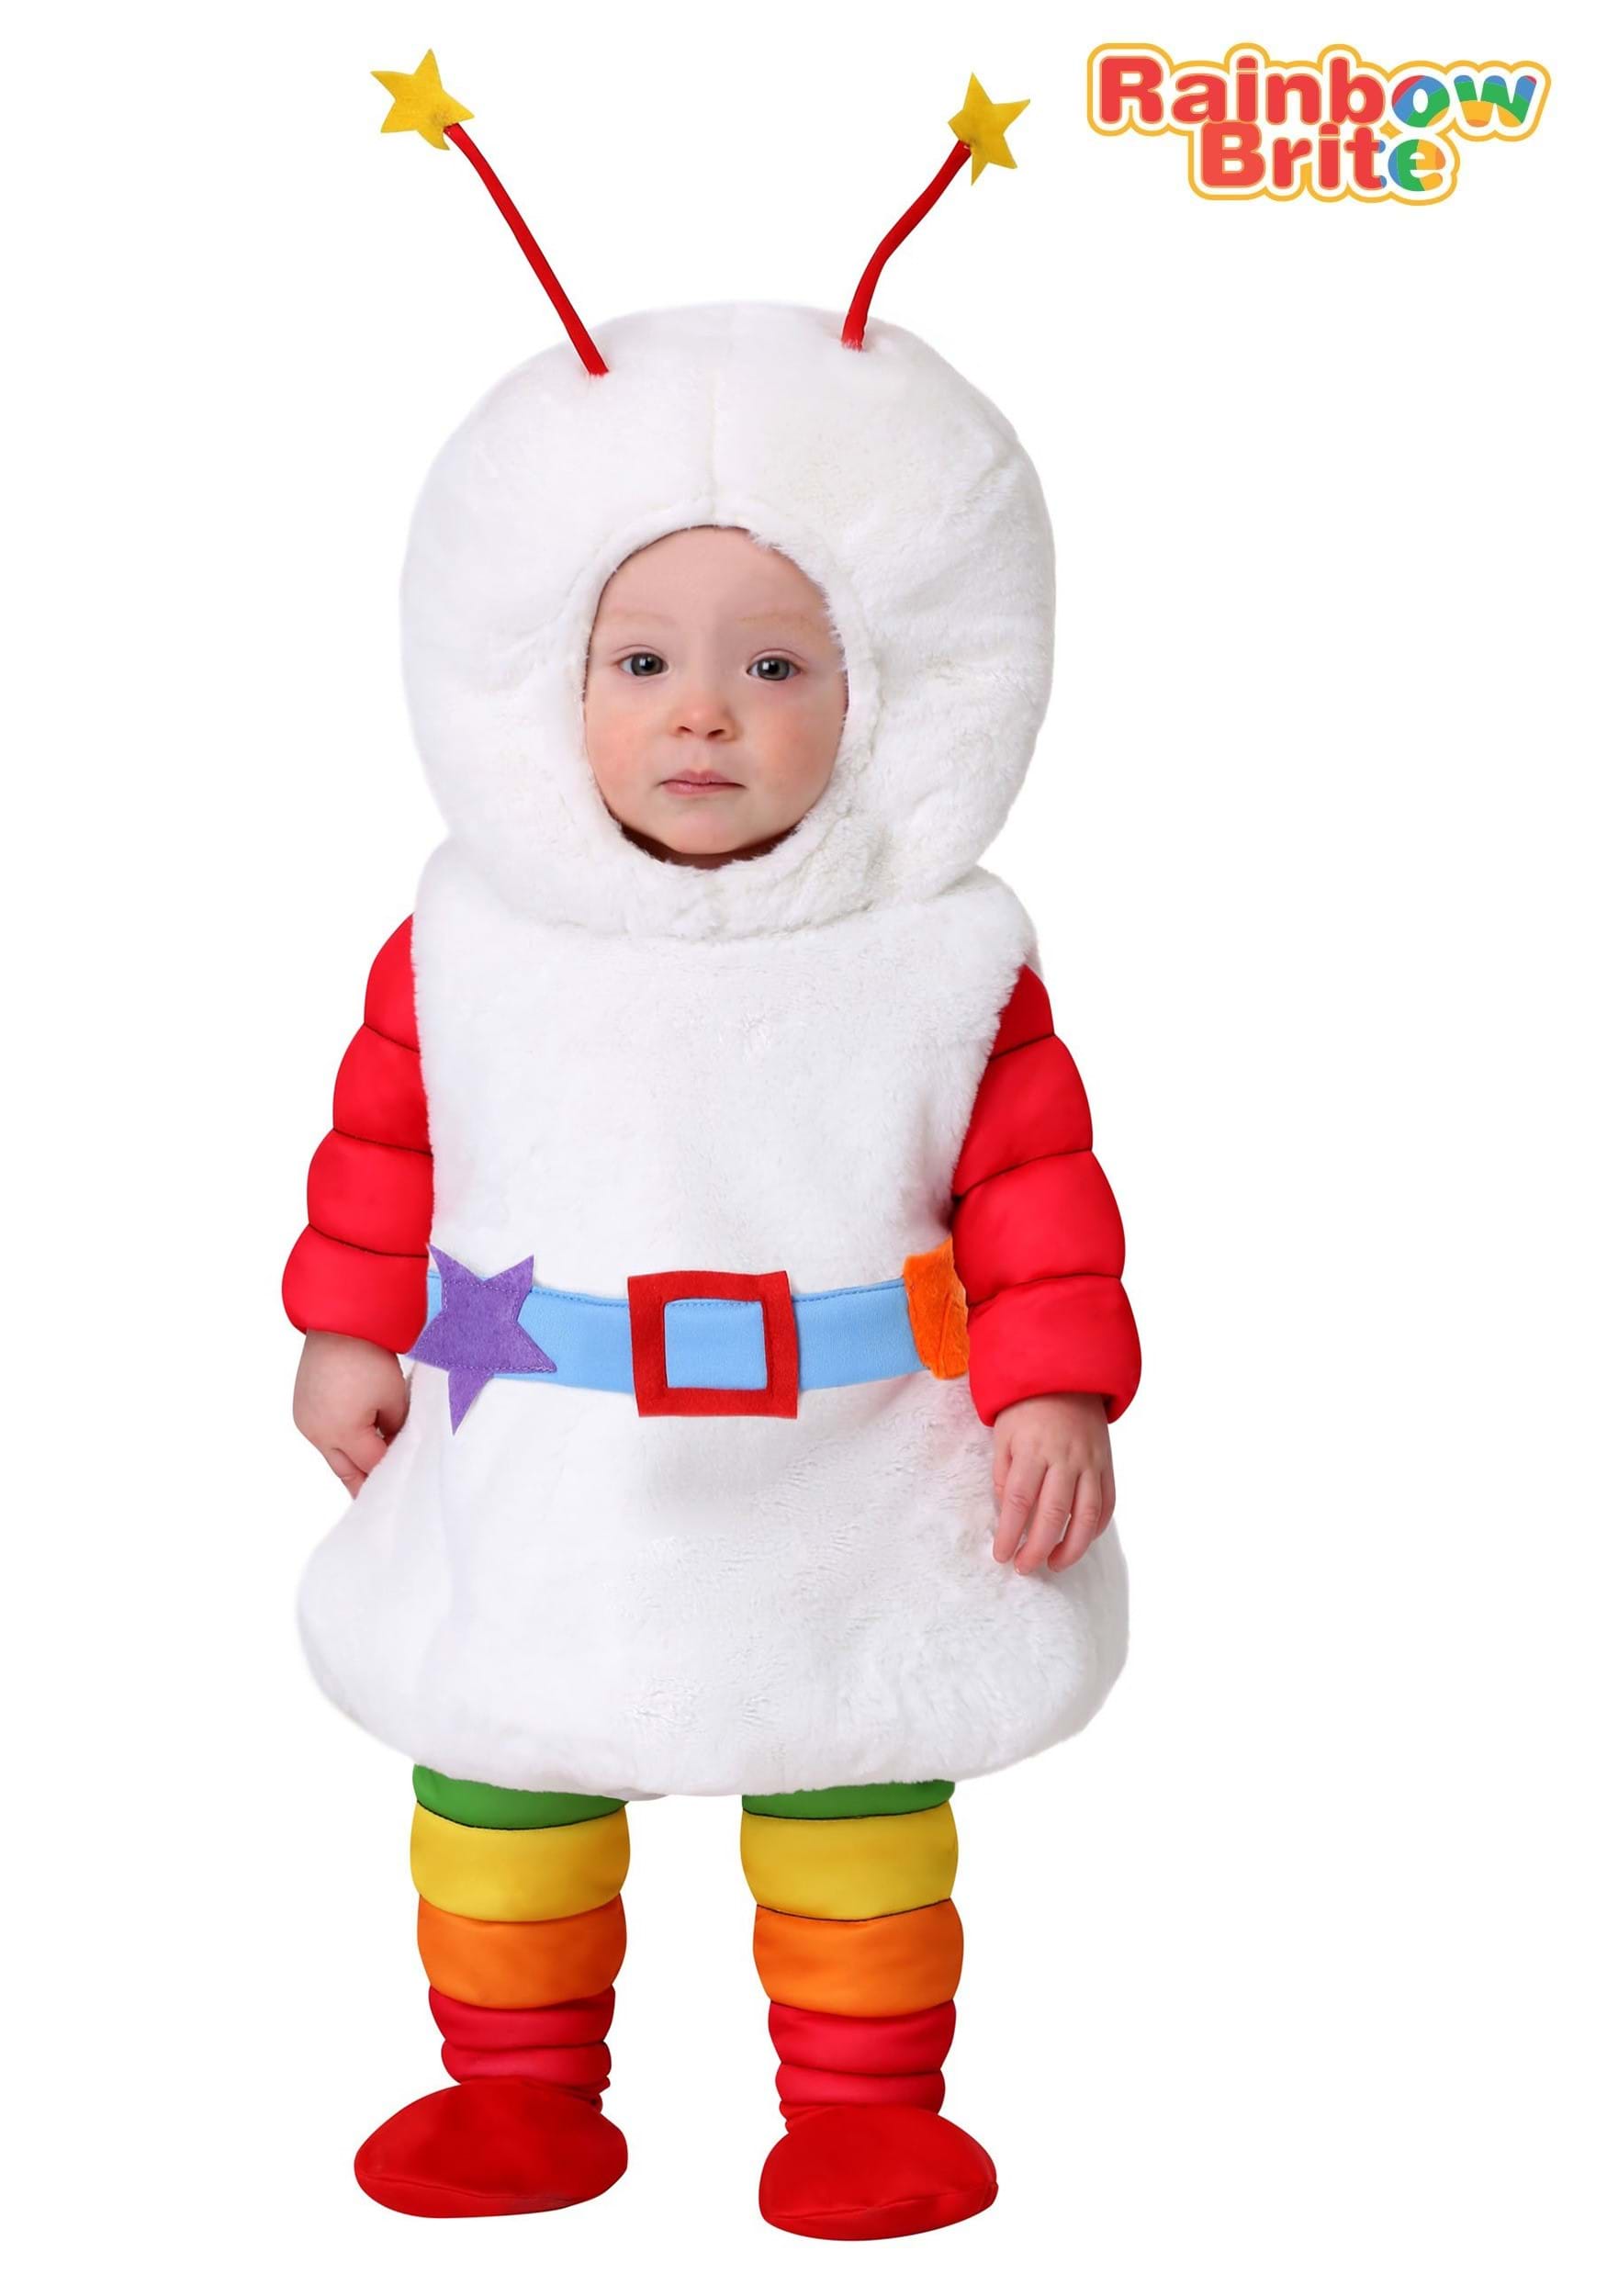 https://images.halloweencostumes.ca/products/44471/1-1/toddler-rainbow-brite-sprite-costume.jpg